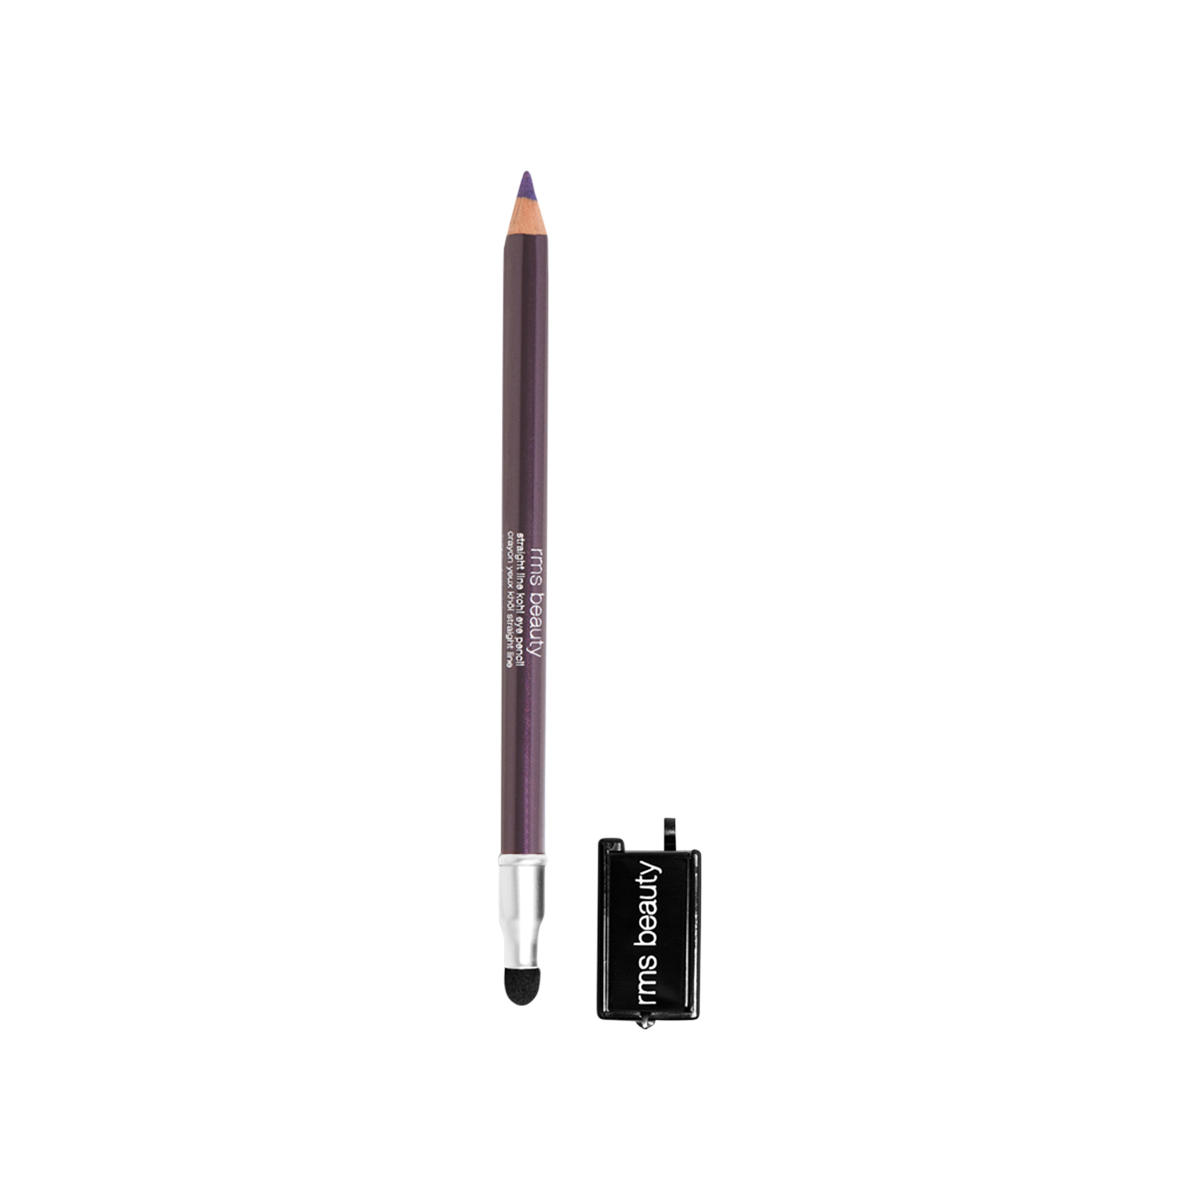 RMS Beauty - Straight Line Kohl Eye Pencil Plum